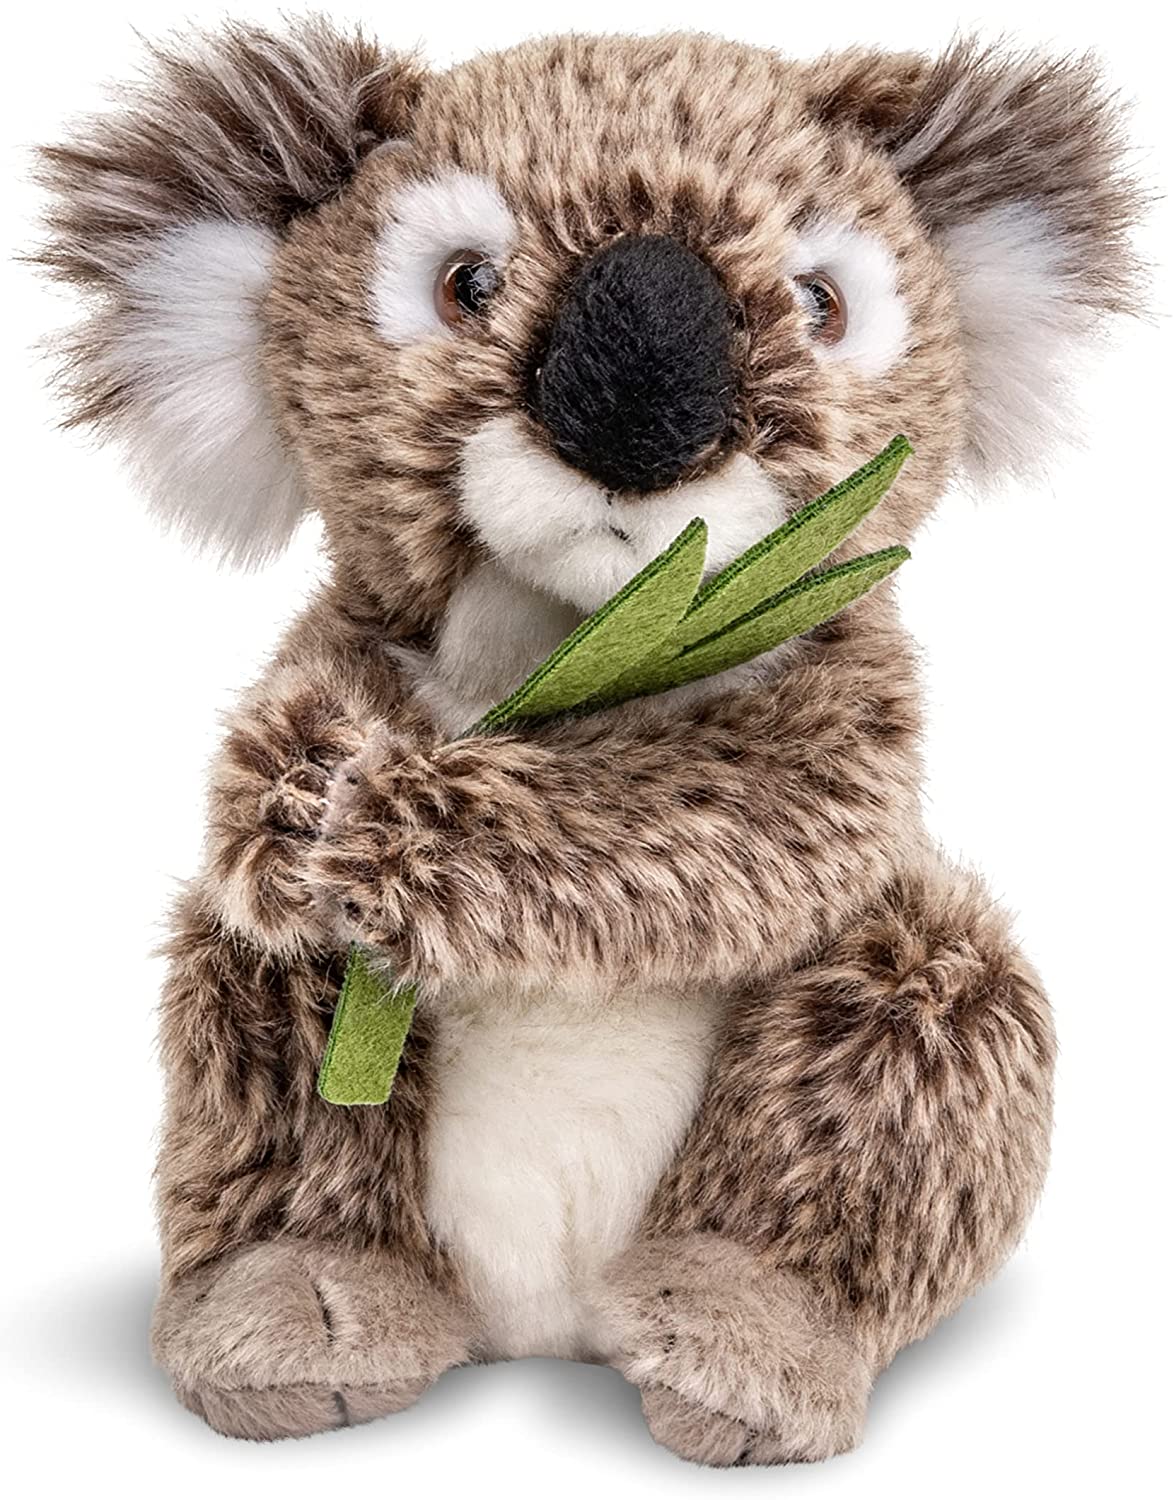  Koala with leaf, sitting